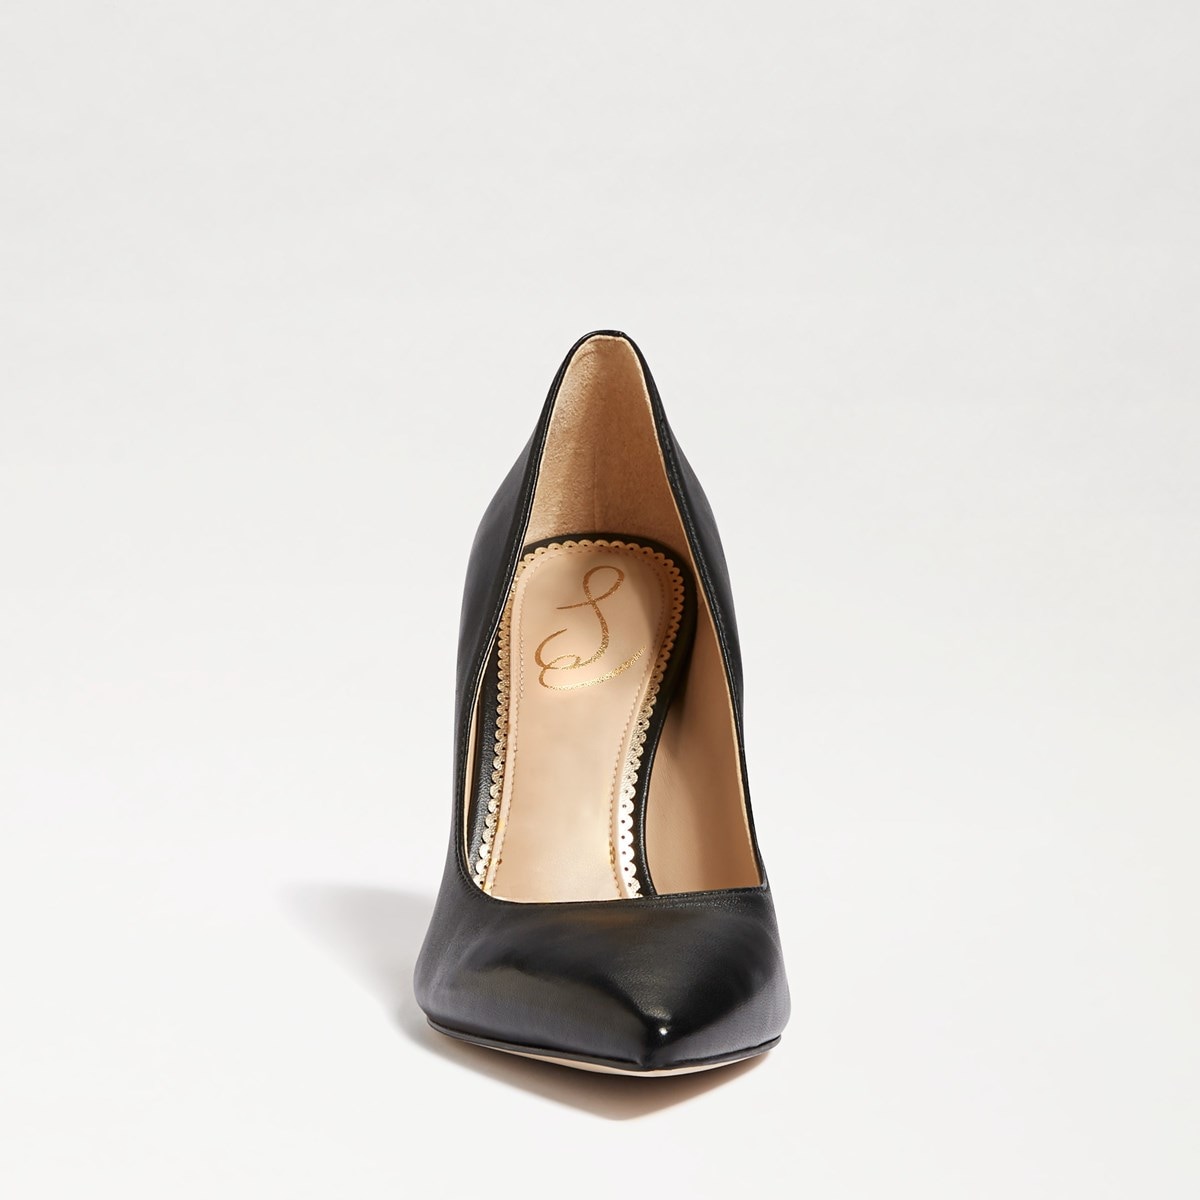 Sam Edelman Solid Black Heels Size 8 - 65% off